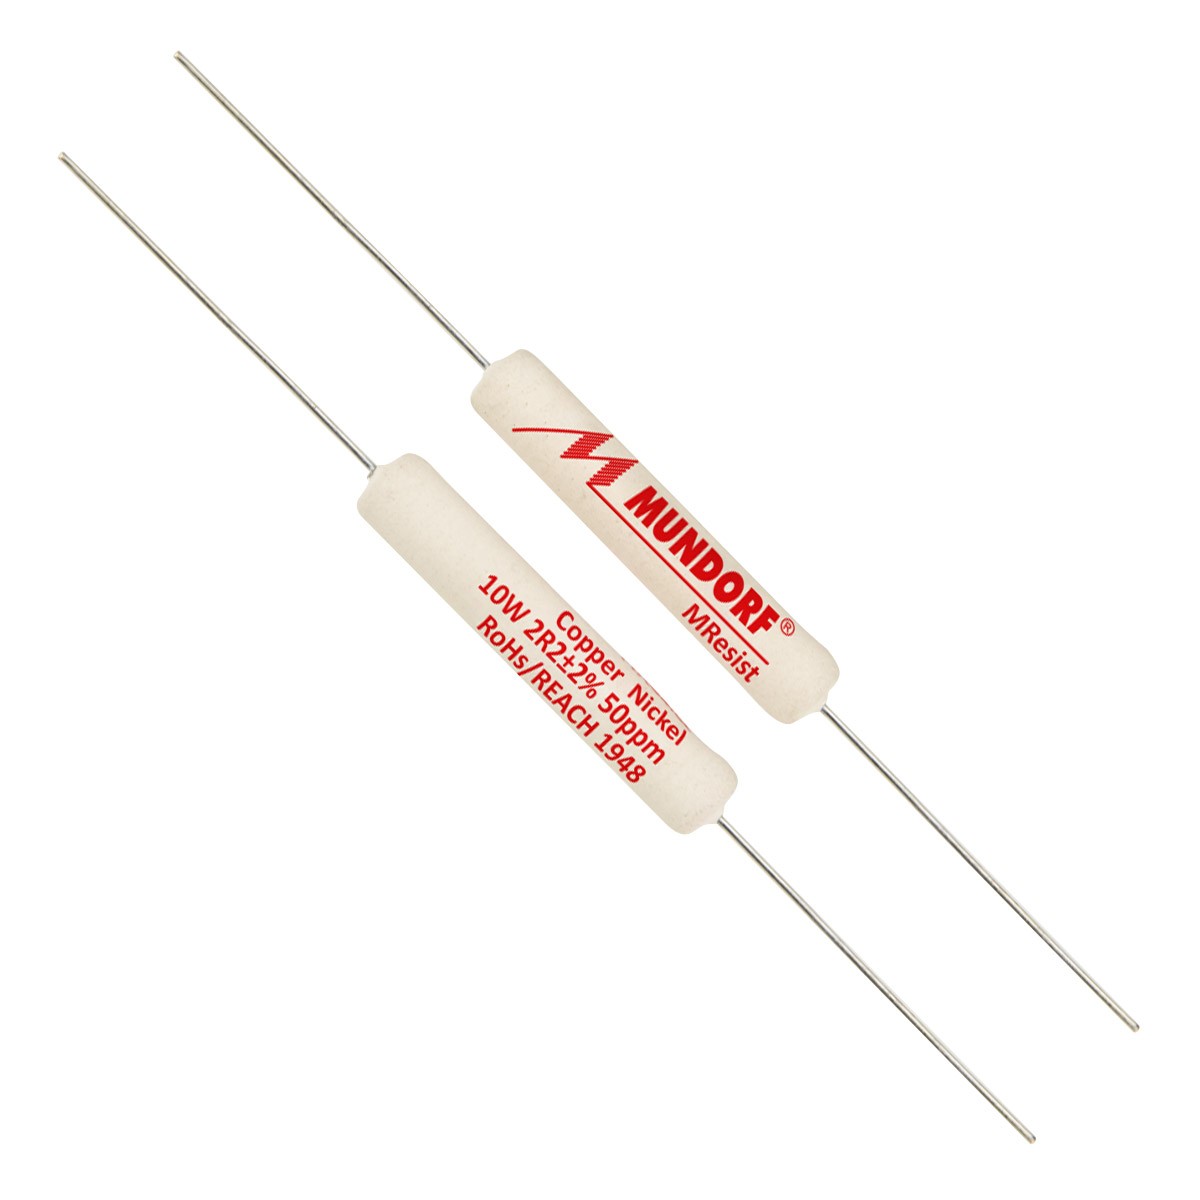 MUNDORF MRESIST CLASSIC Resistor 10W 0.22 Ohm